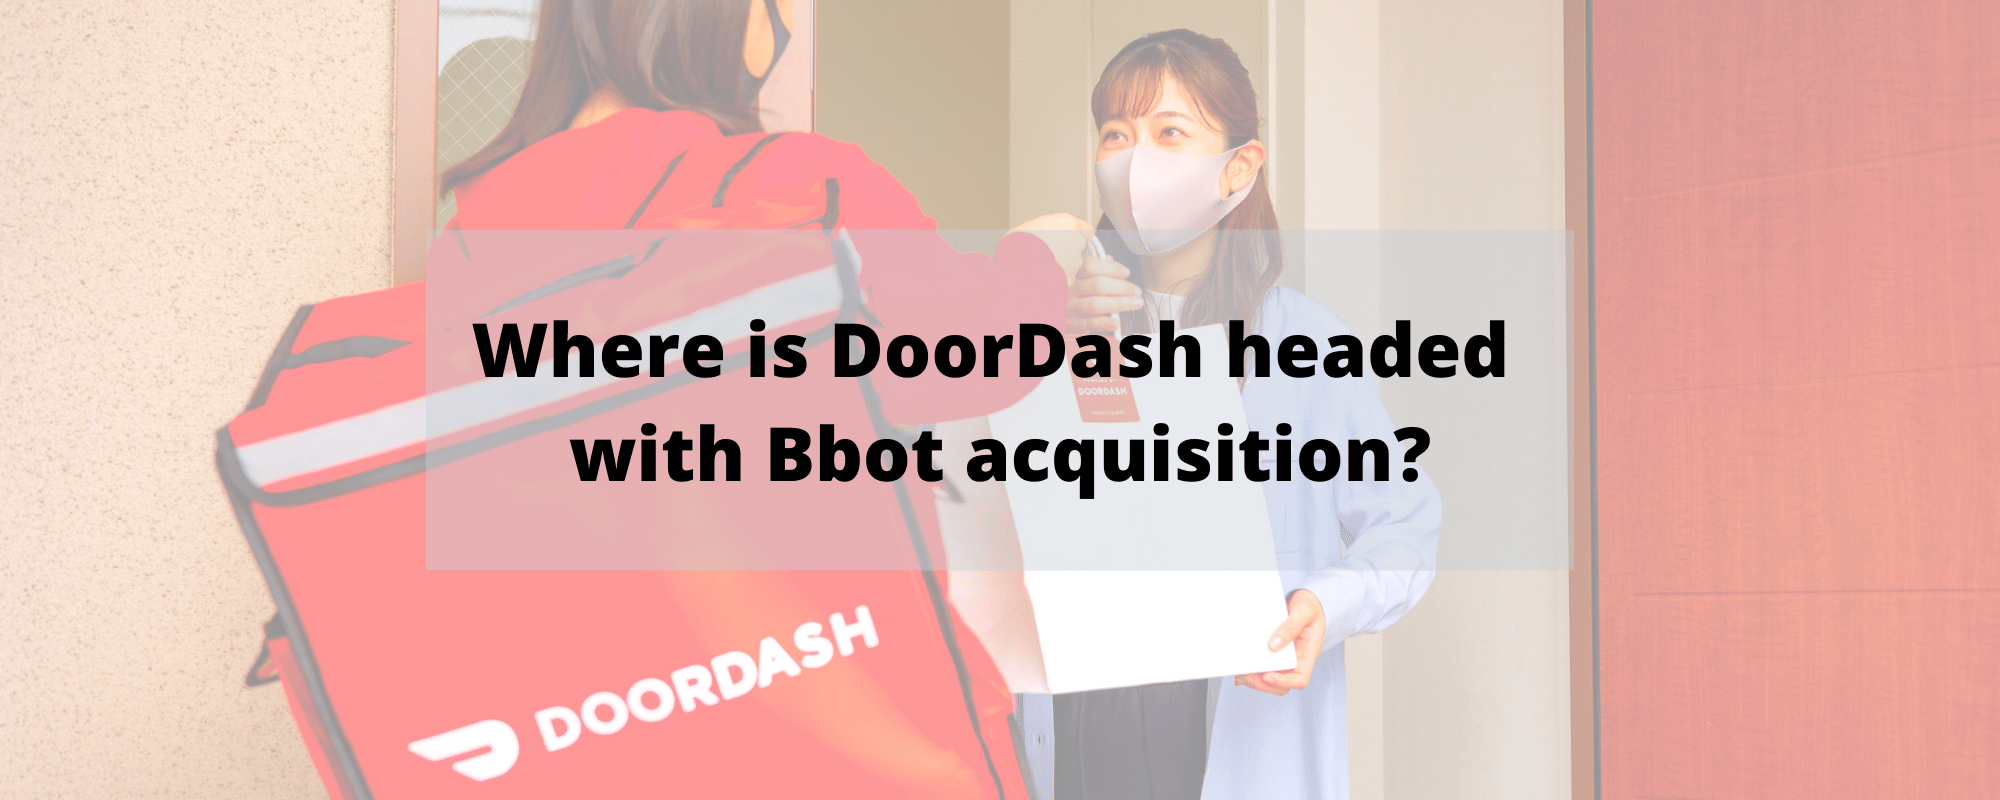 doordash acquires bbot